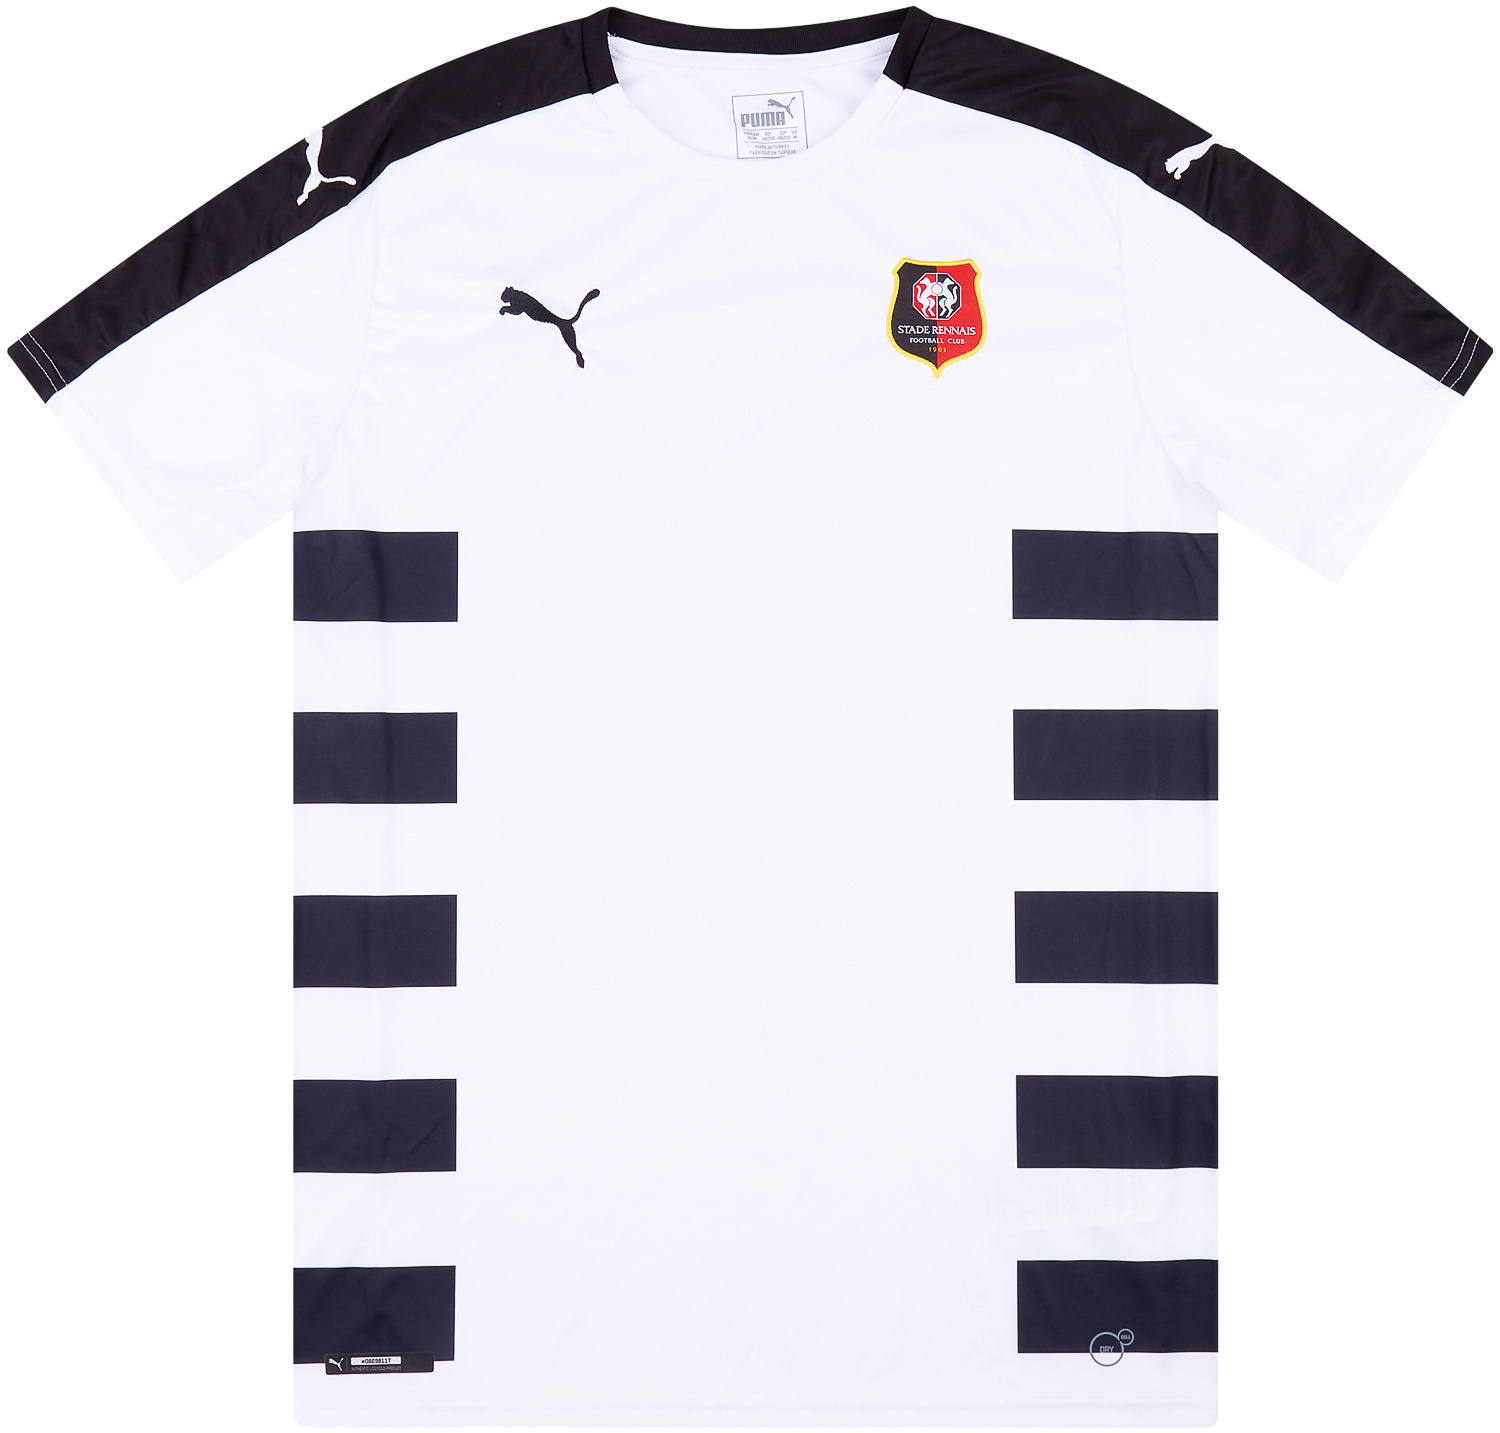 Rennes  Fora camisa (Original)